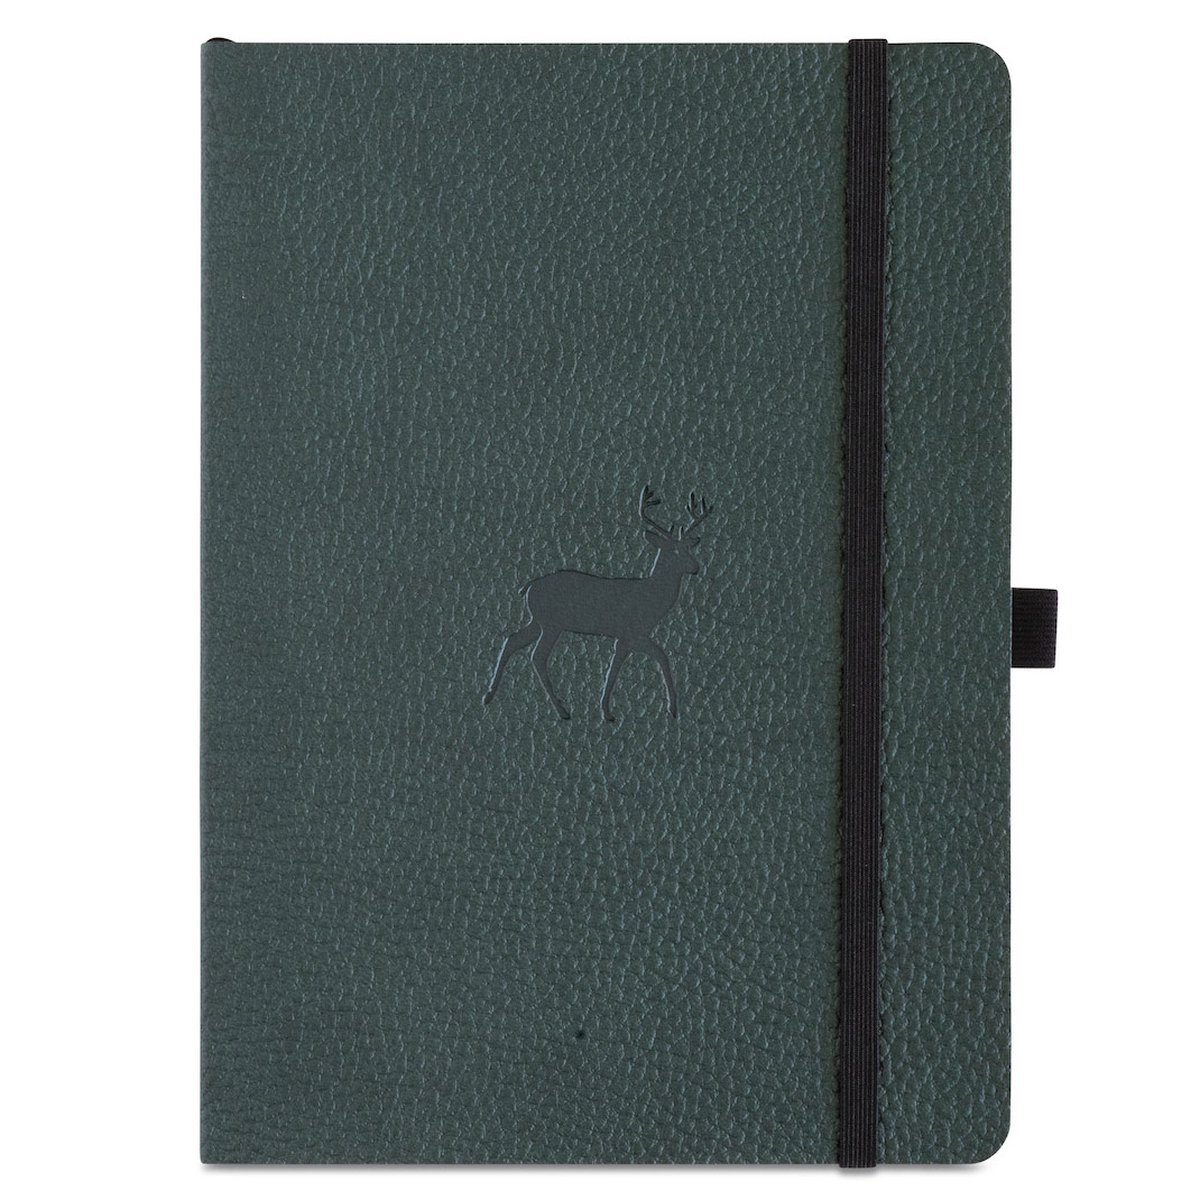 Dingbats* Wildlife Soft Cover A5+ Green Deer Notebook - Dotted